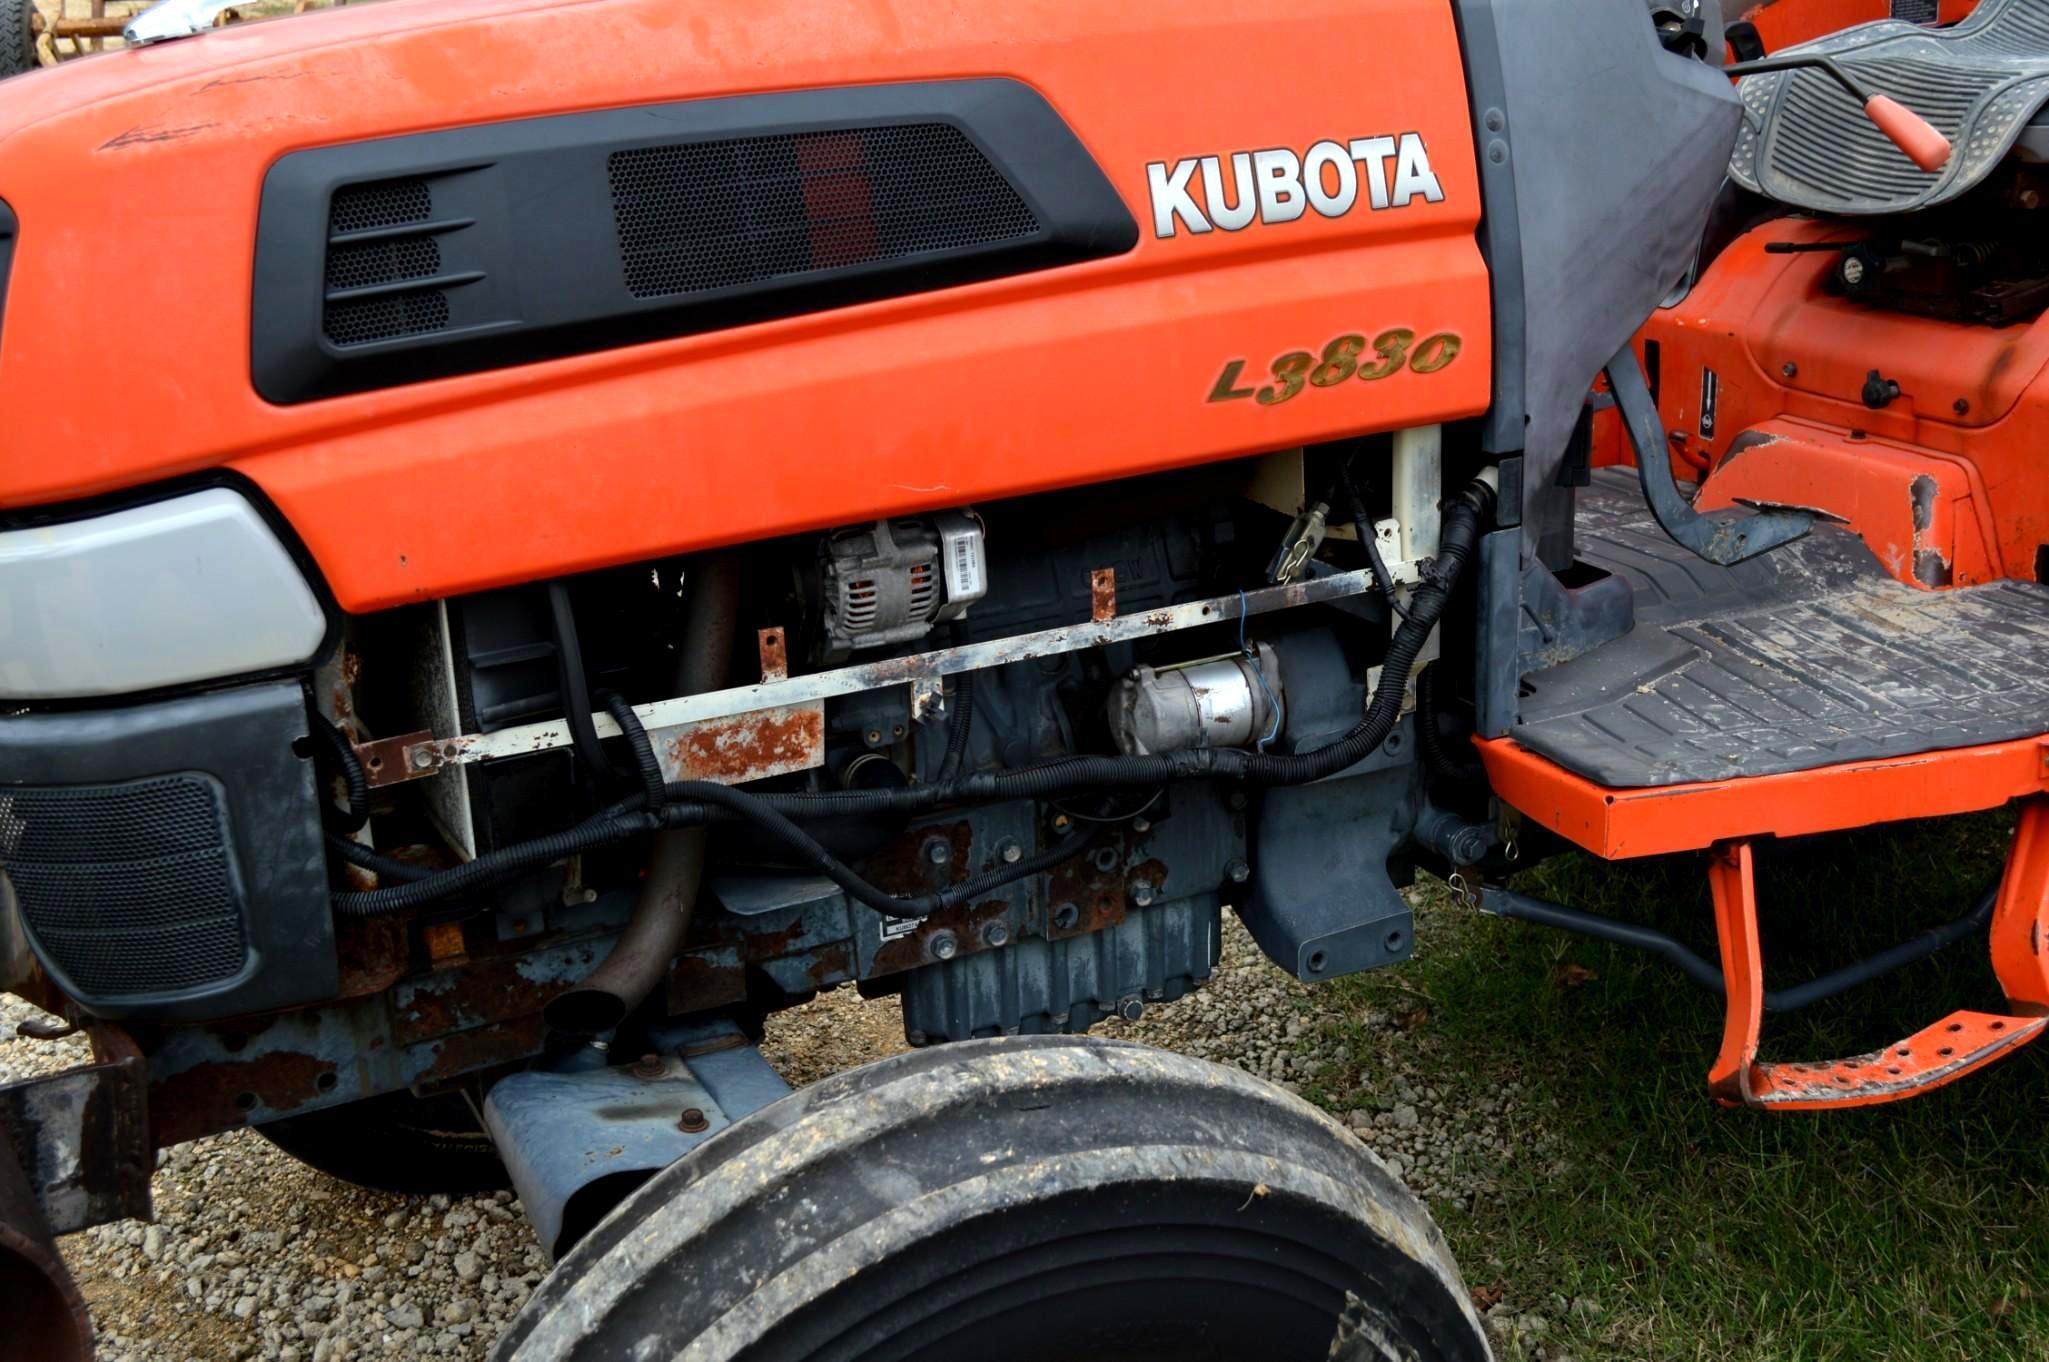 Kubota L3830 2WD Diesel Tractor